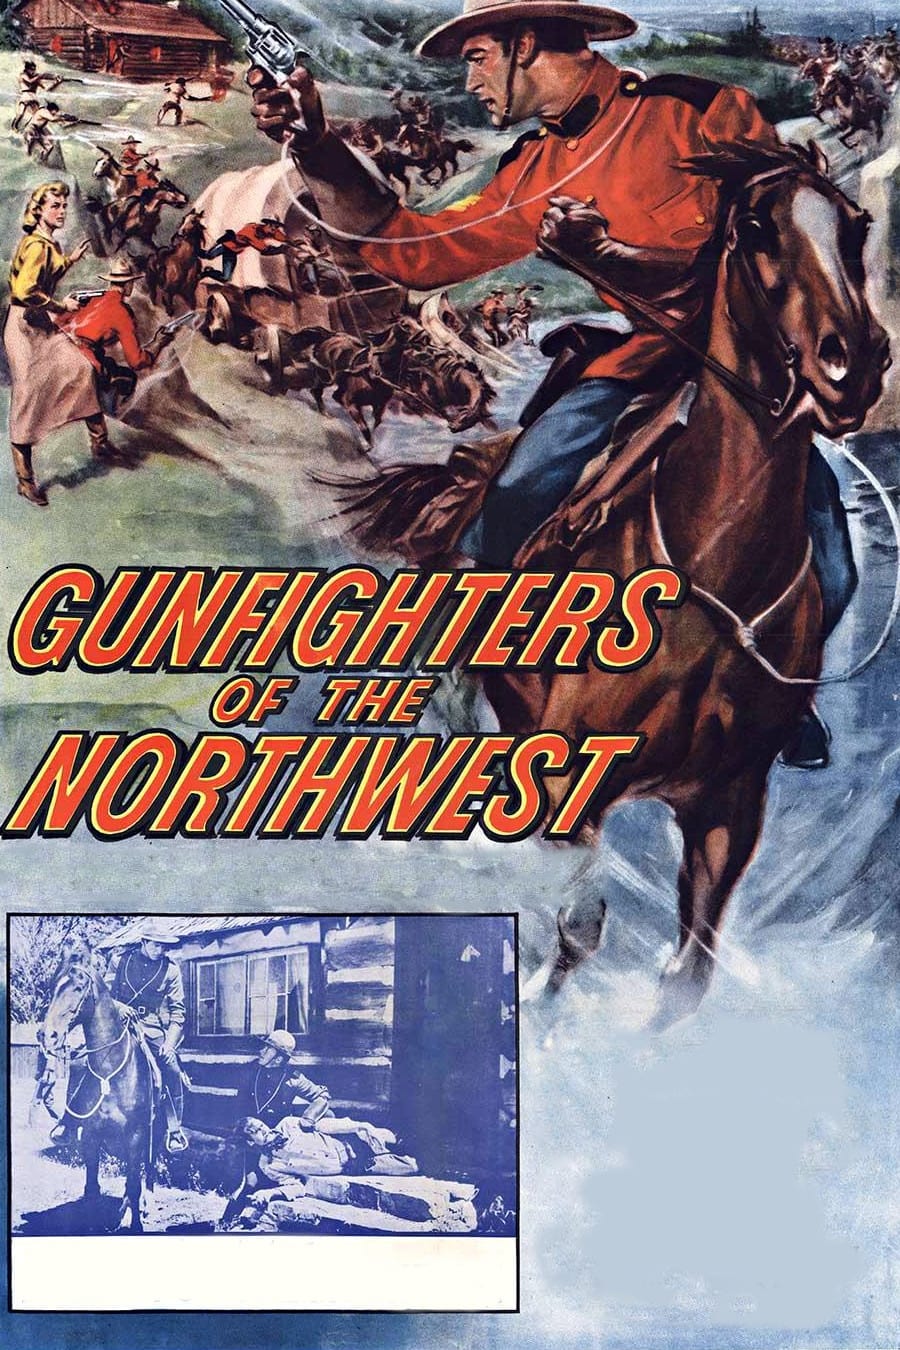 Gunfighters of the Northwest (1954)